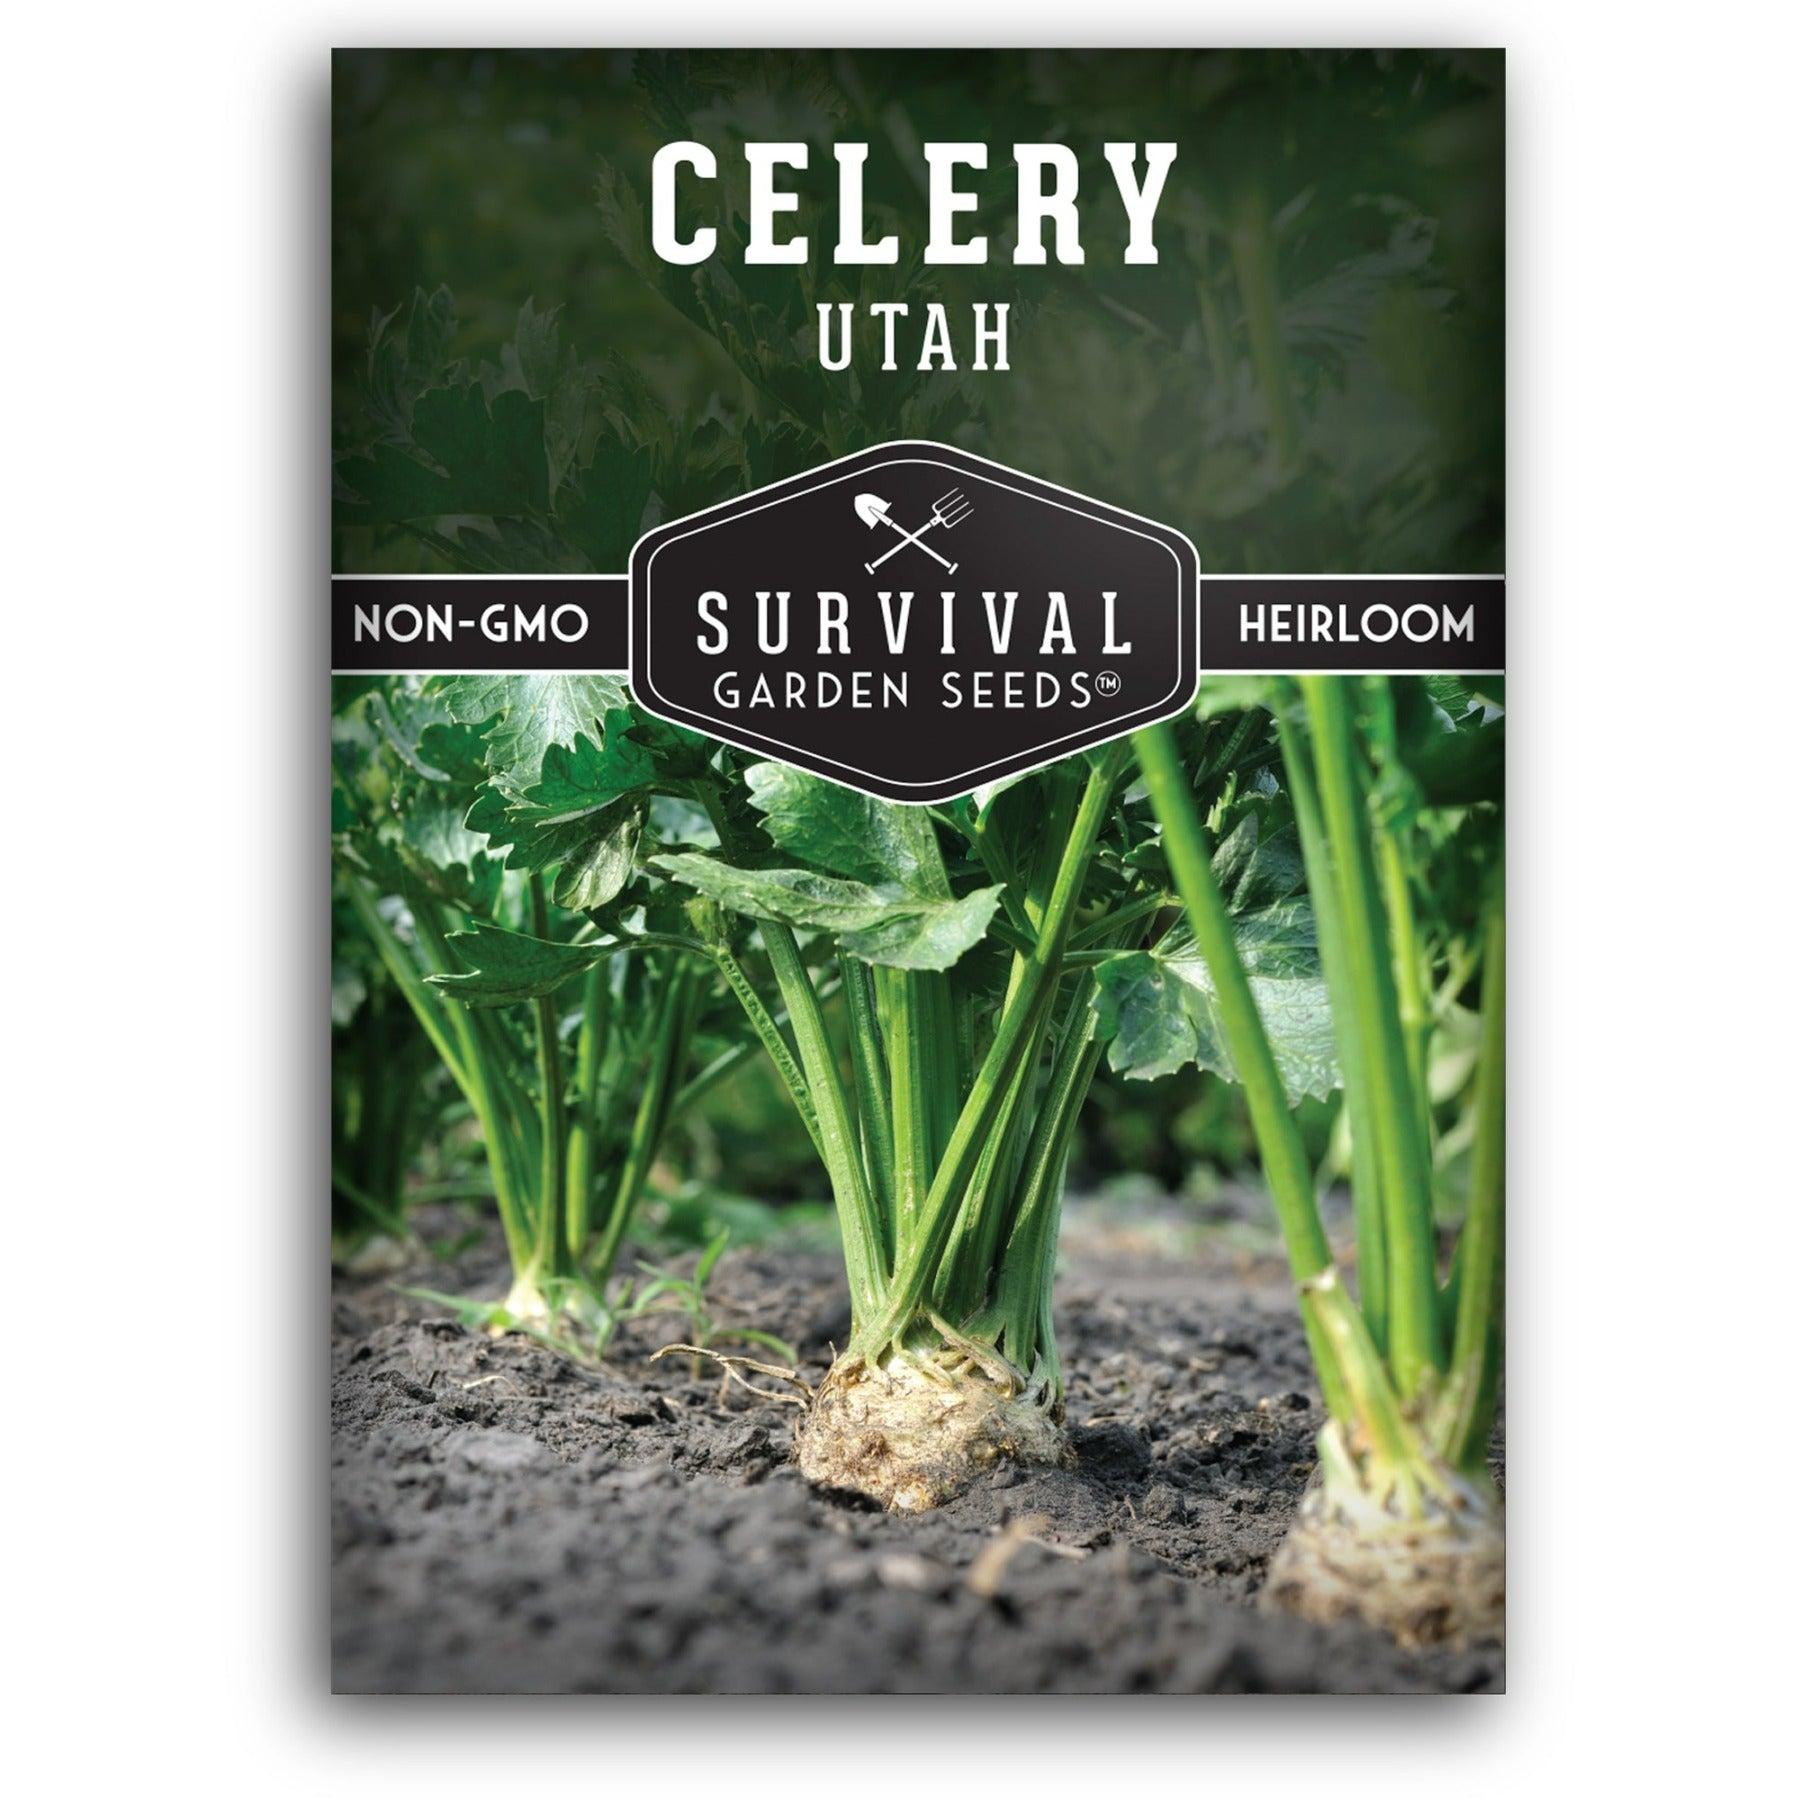 Utah Celery seeds for planting